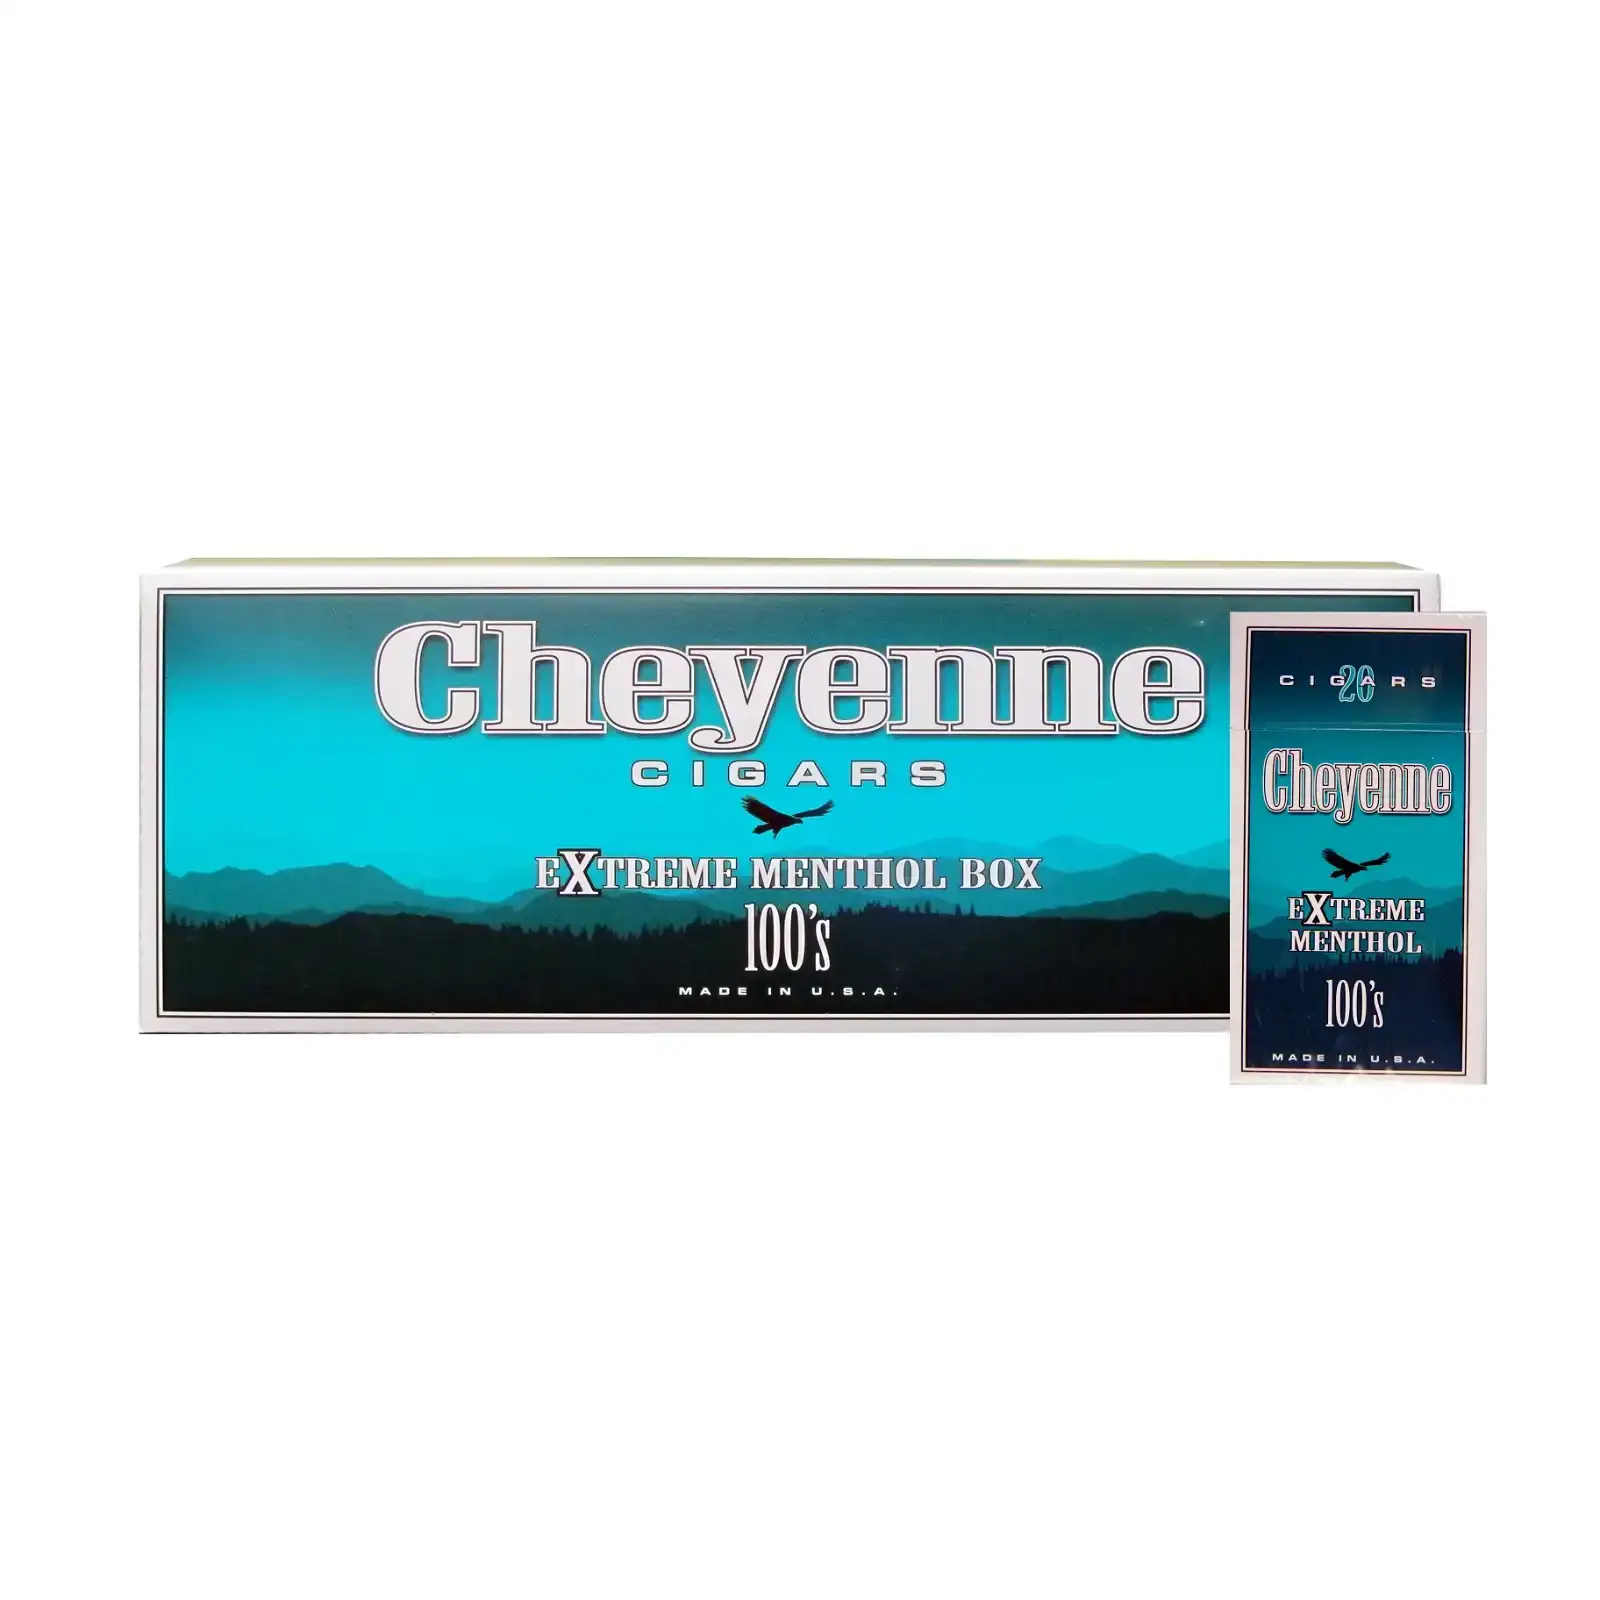 Cheyenne Extreme Menthol Little Cigars